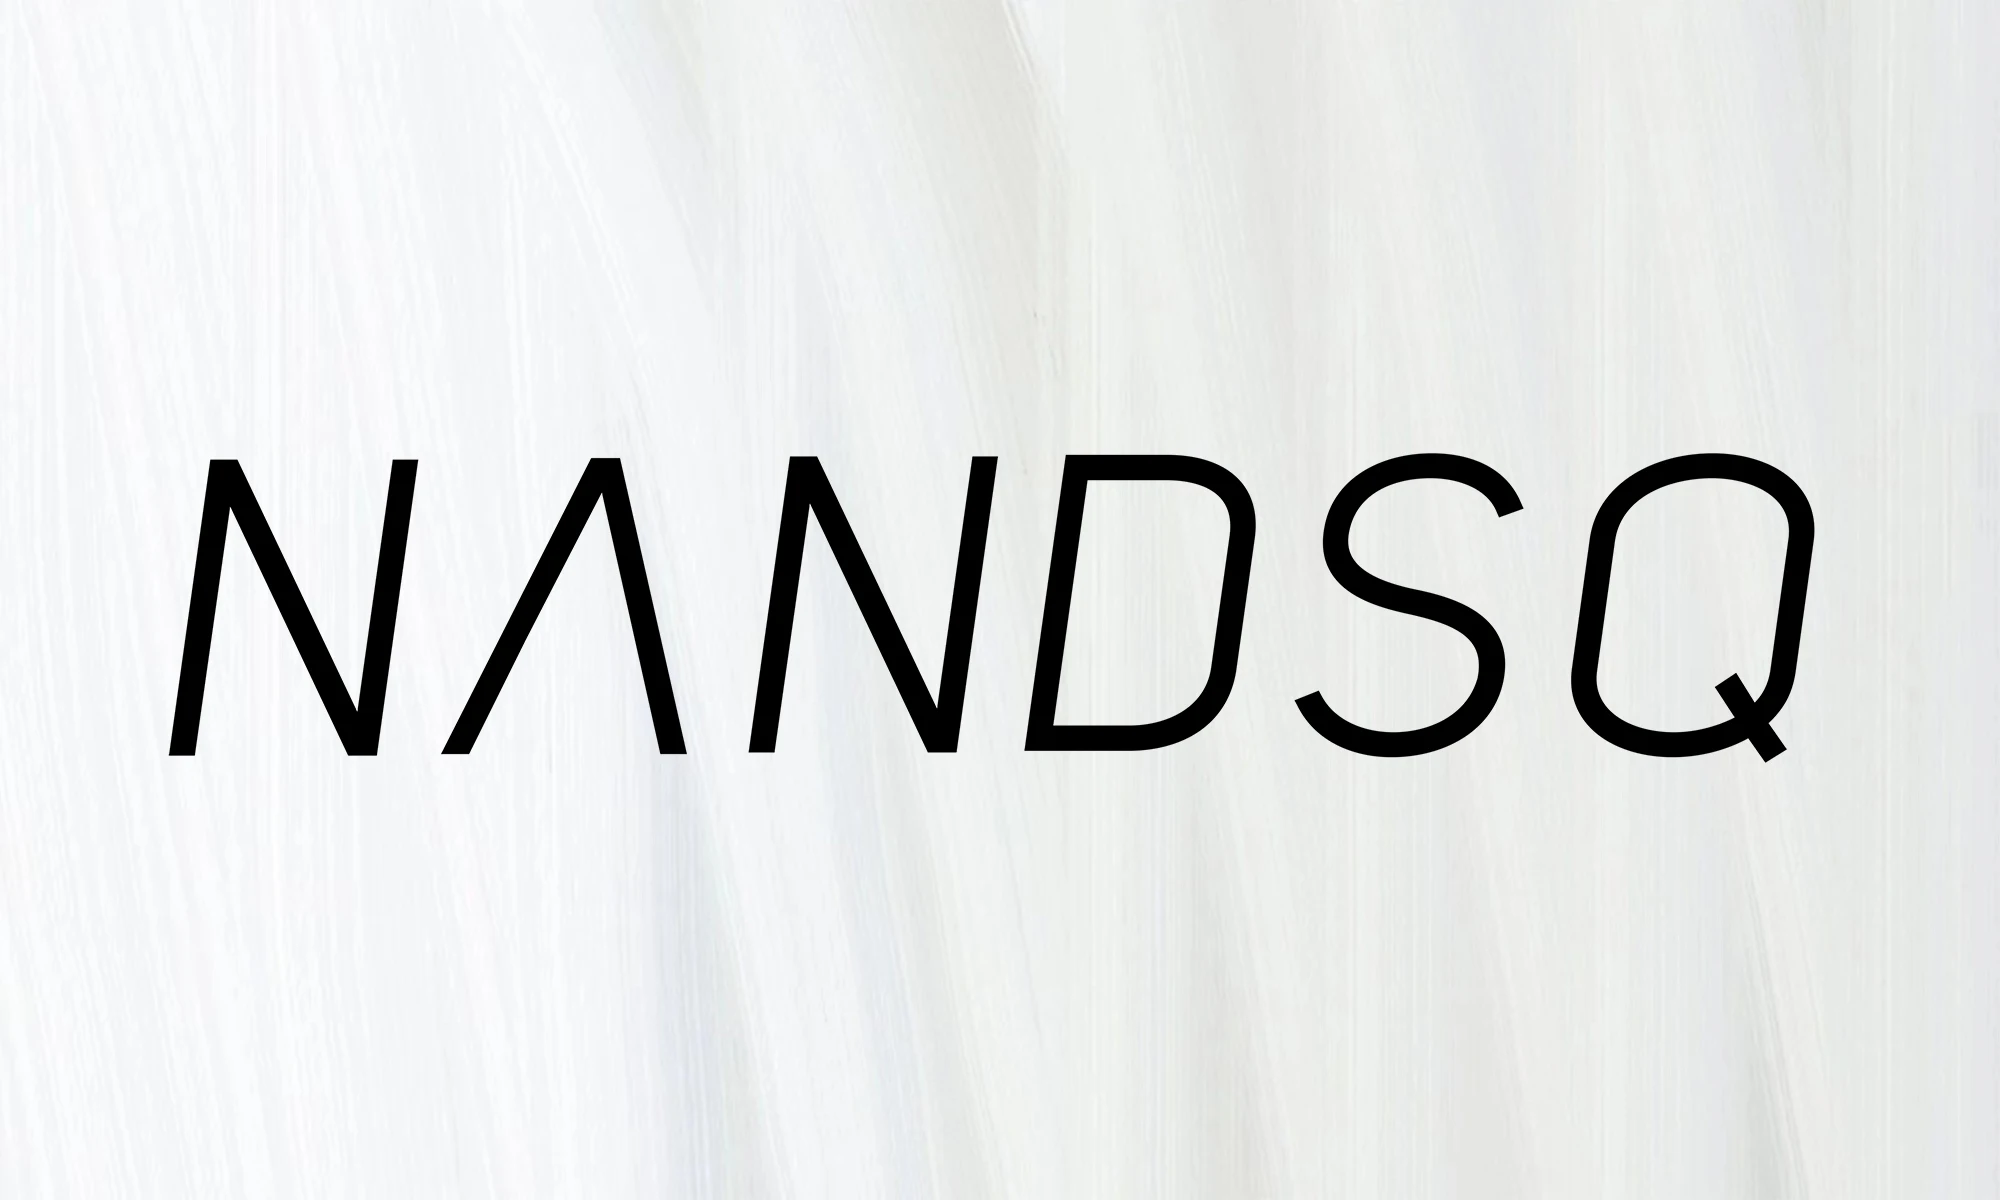 NANDSQ Hardware Mfg (Shanghai) Co., Ltd.